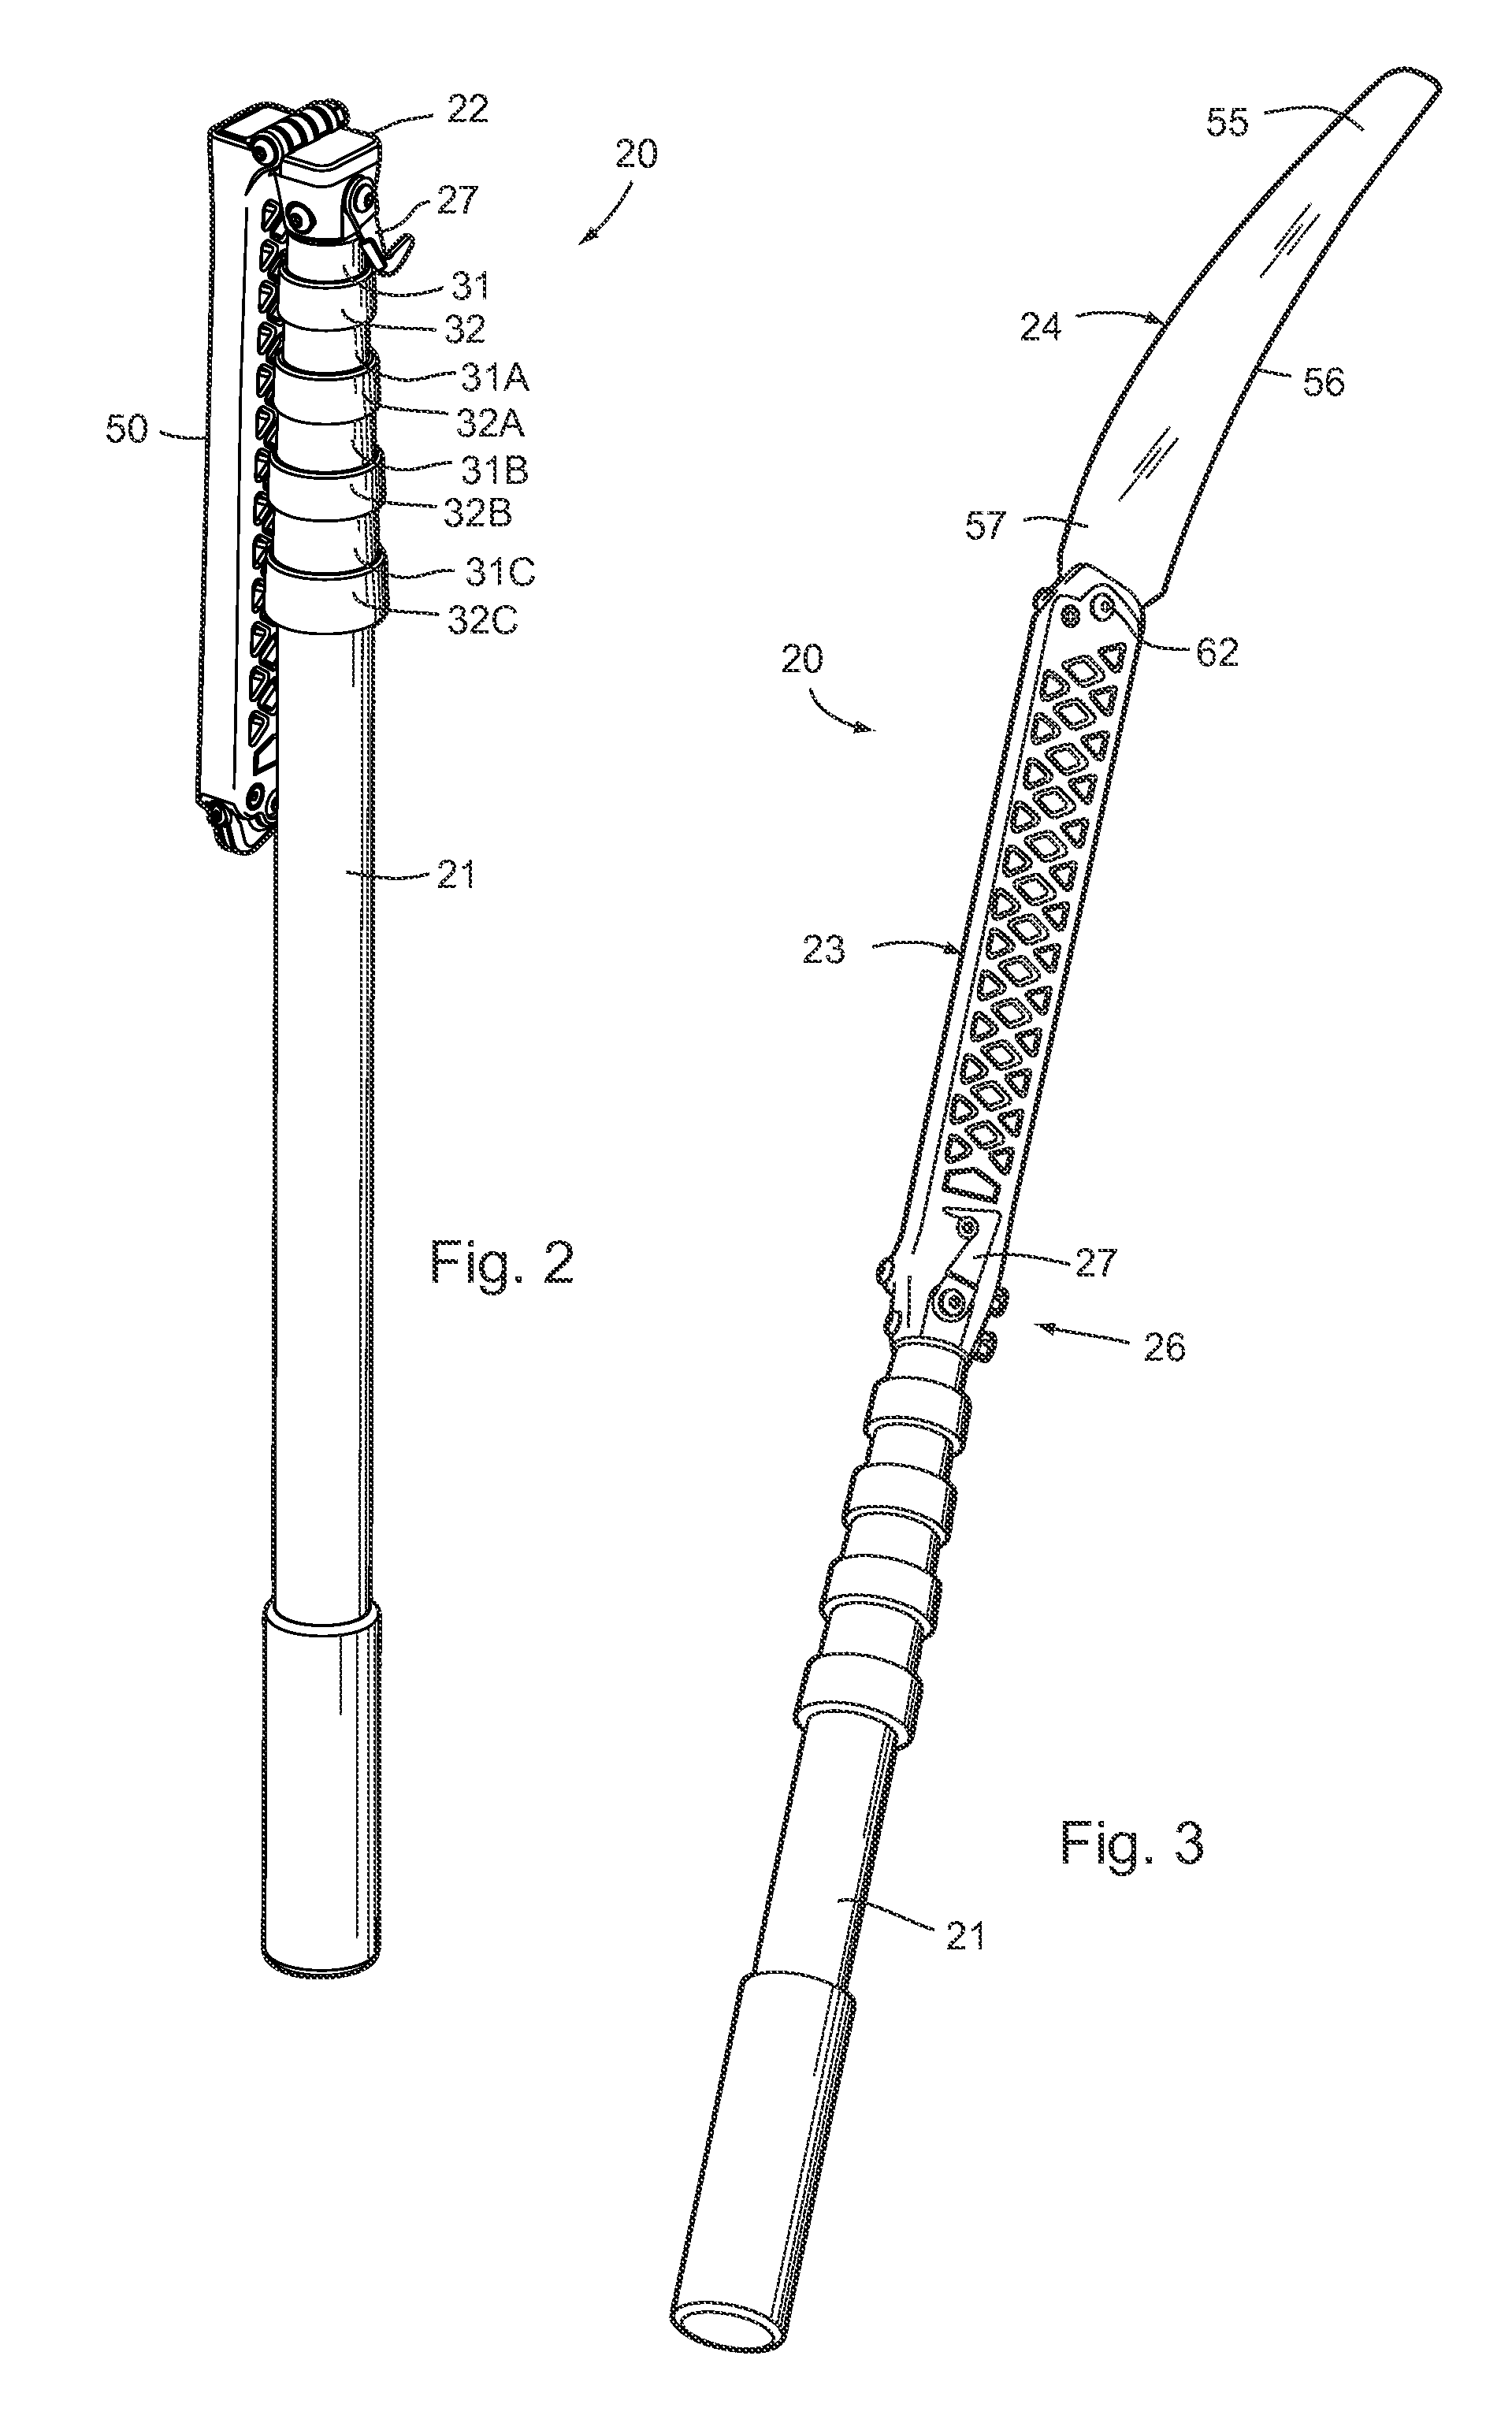 Foldable-storable pole saw